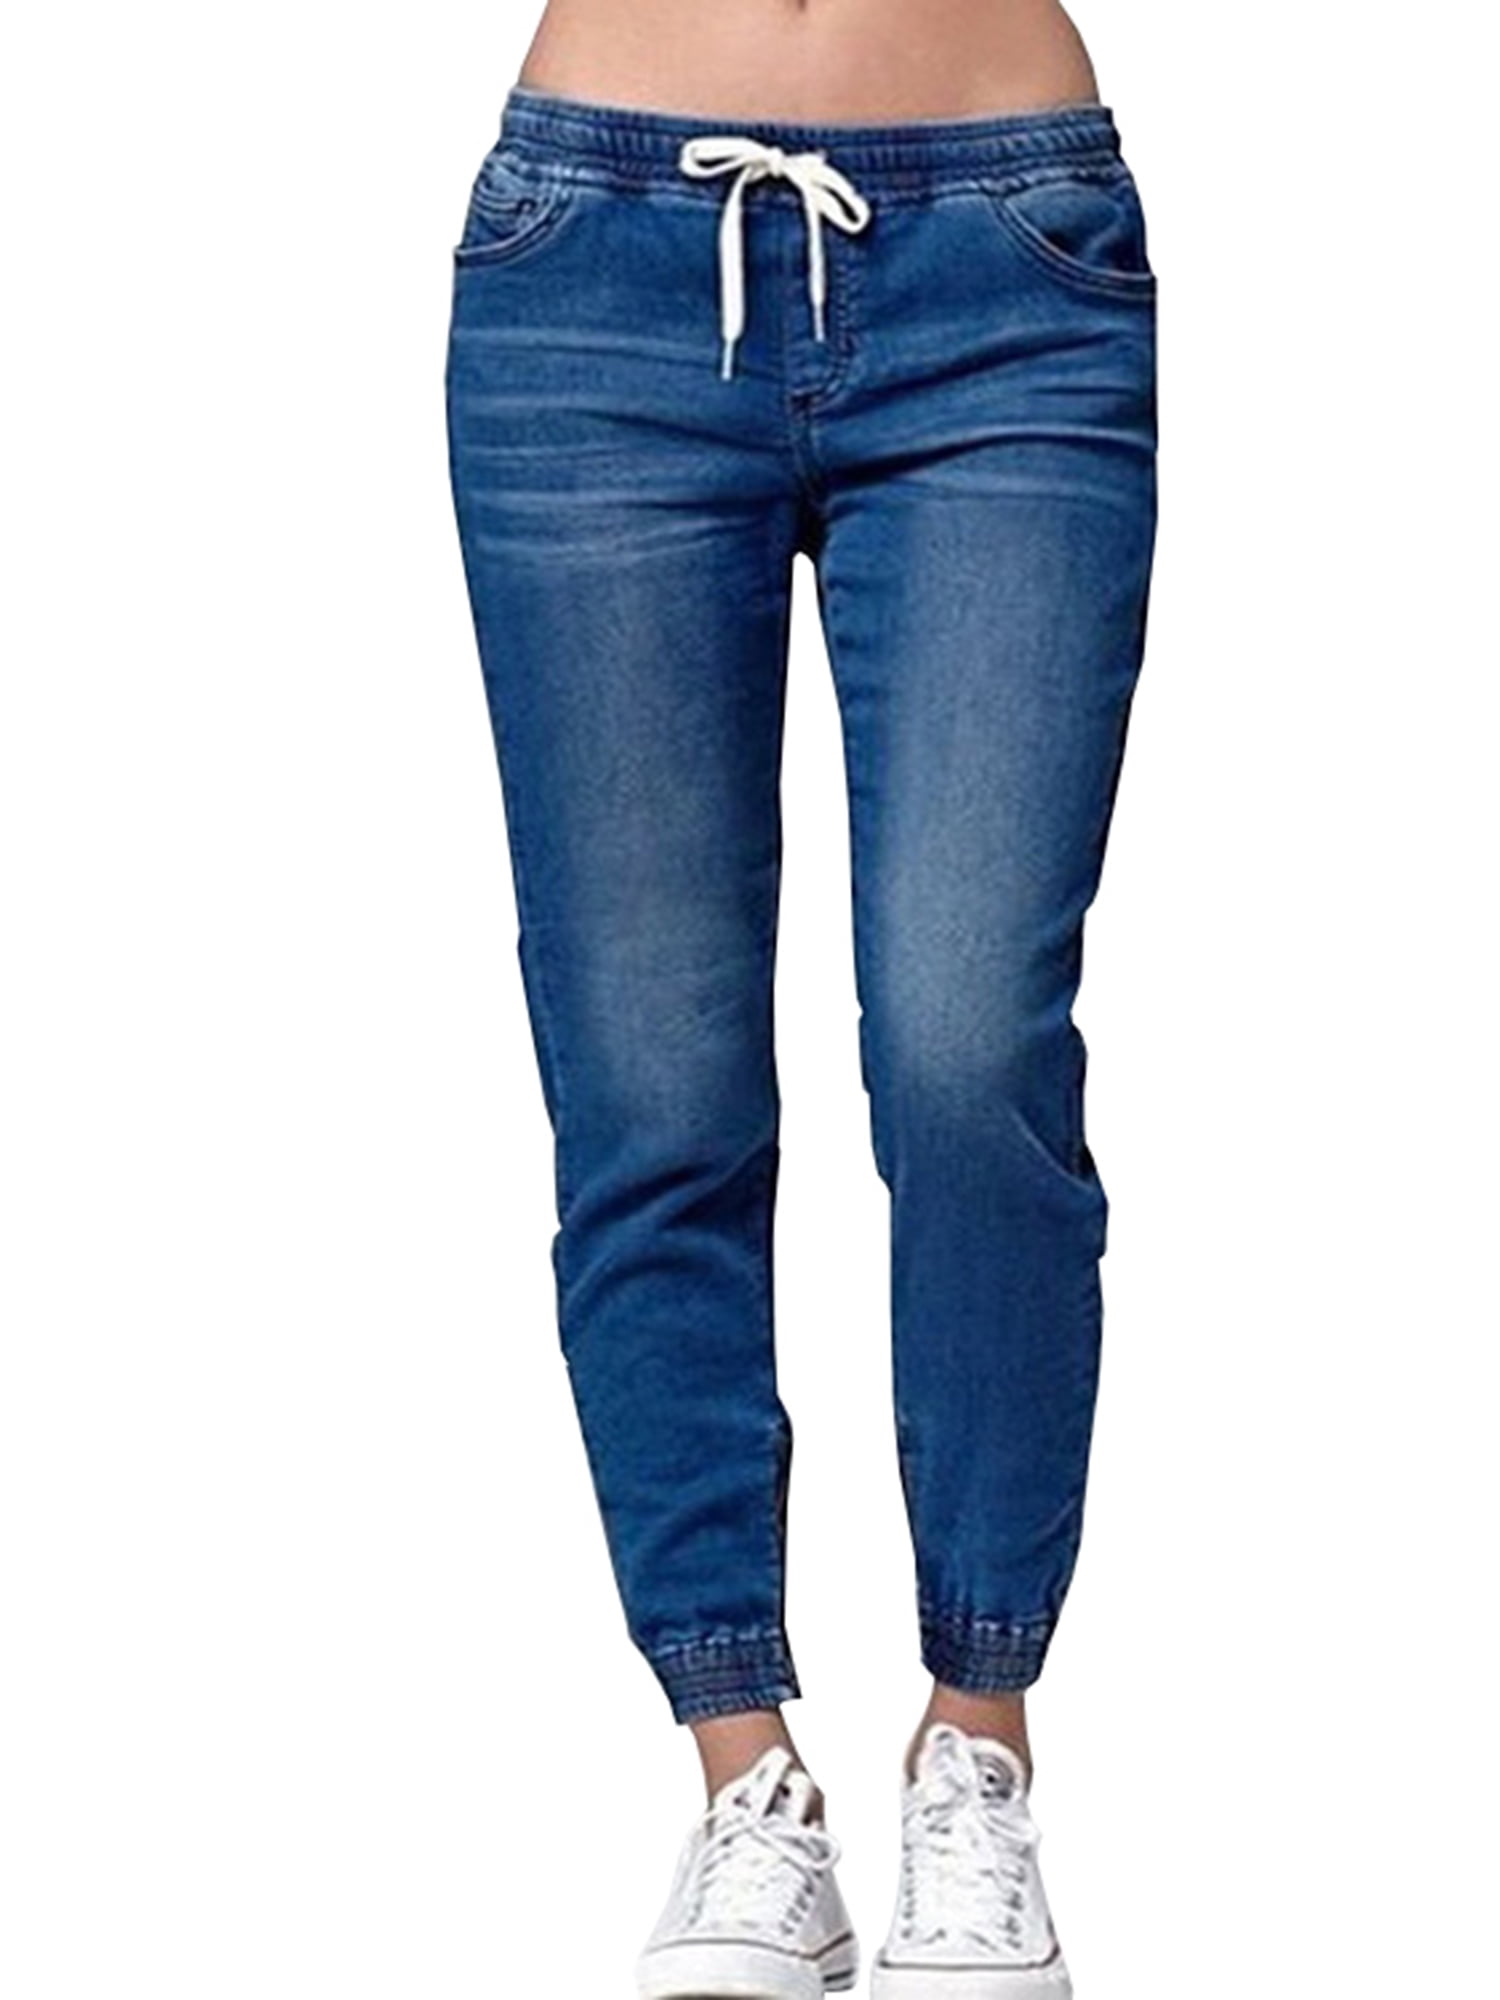 Women Size Boyfriend Jeans Jogger Pants Elastic Waisted Stretchy Casual Trousers S-5XL - Walmart.com